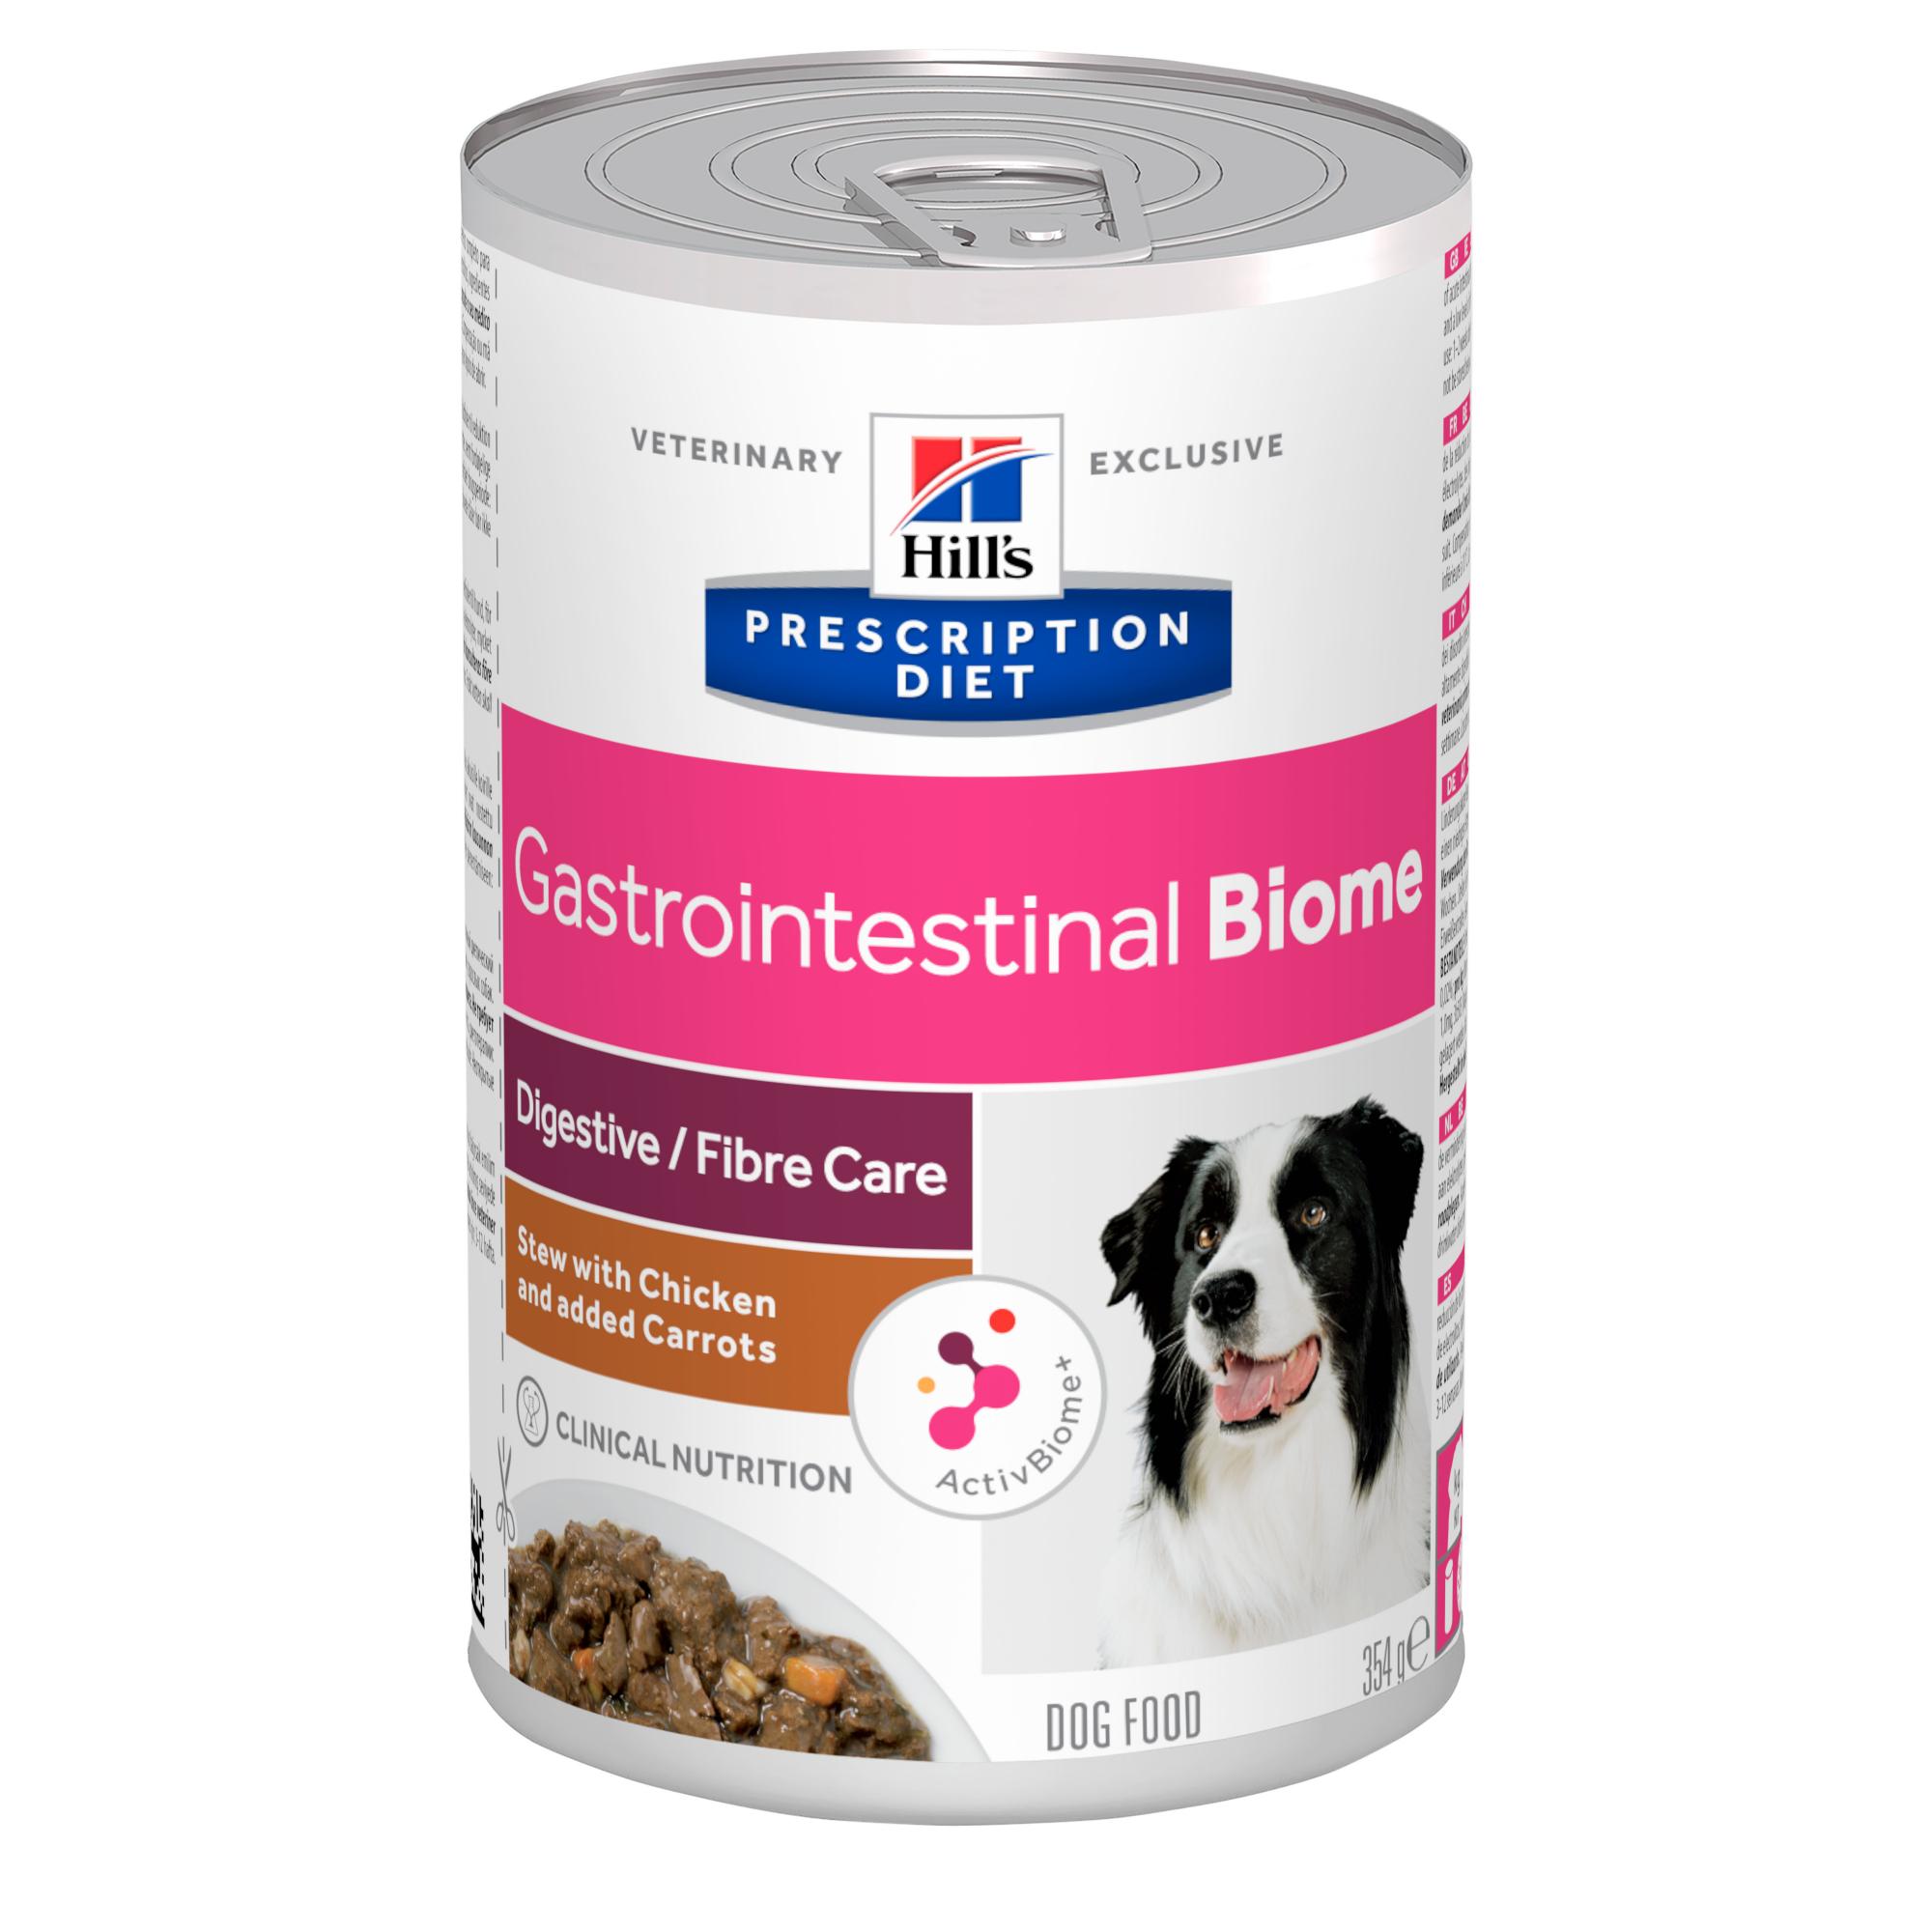 Hill's Prescription Diet Gastrointestinal Biome Wet Dog